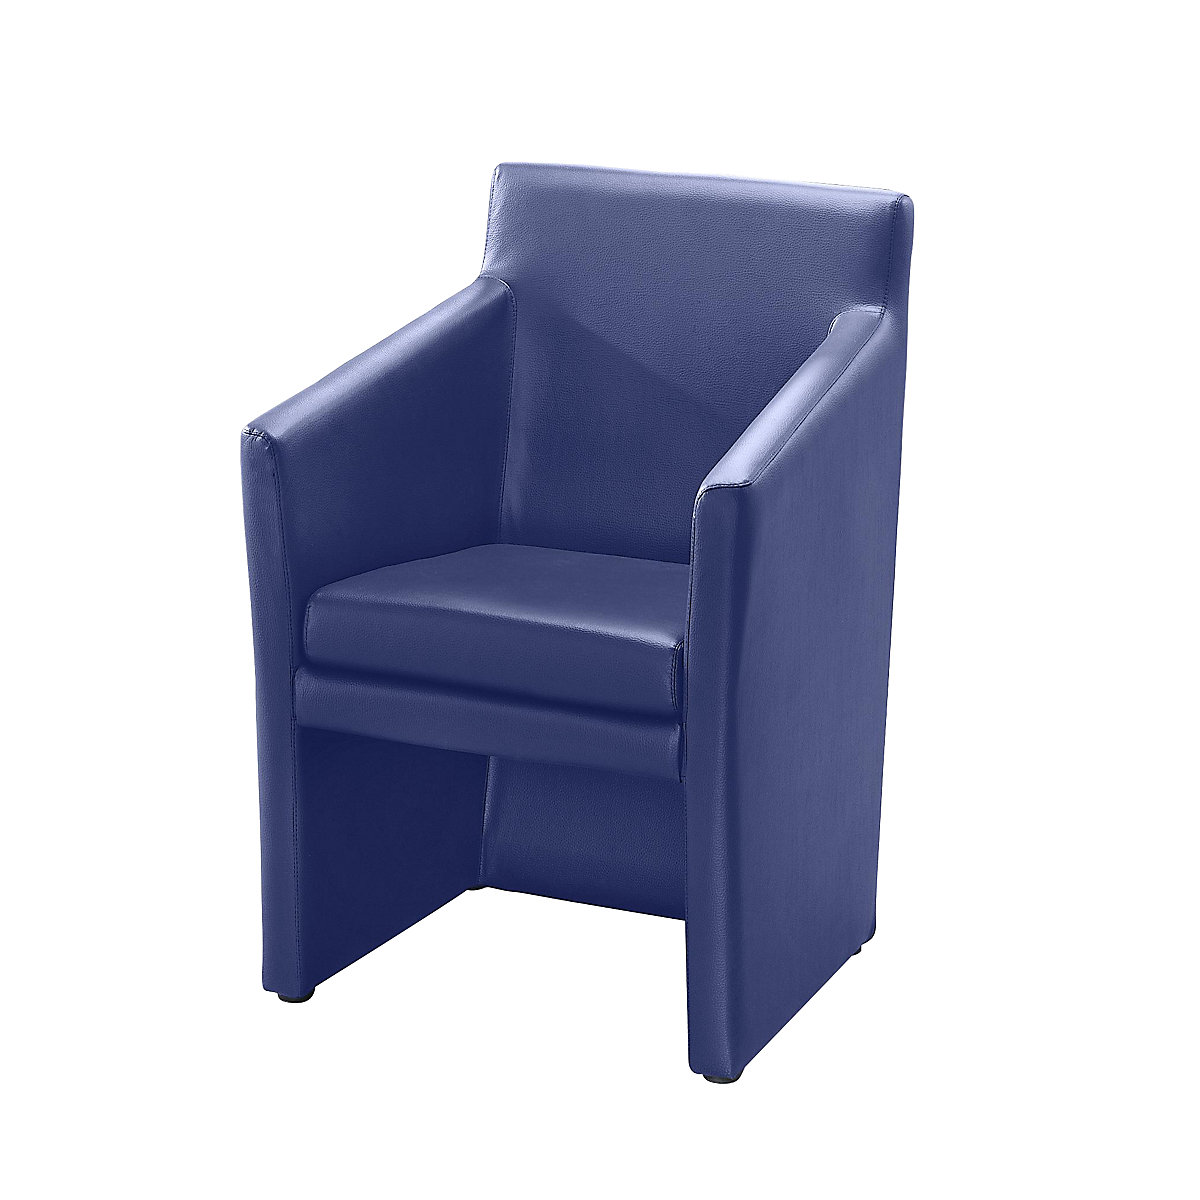 Klub fotelja, kutni oblik, VxŠxD 850 x 575 x 530 mm, presvlaka od poliuretana, u tamnoplavoj boji-4